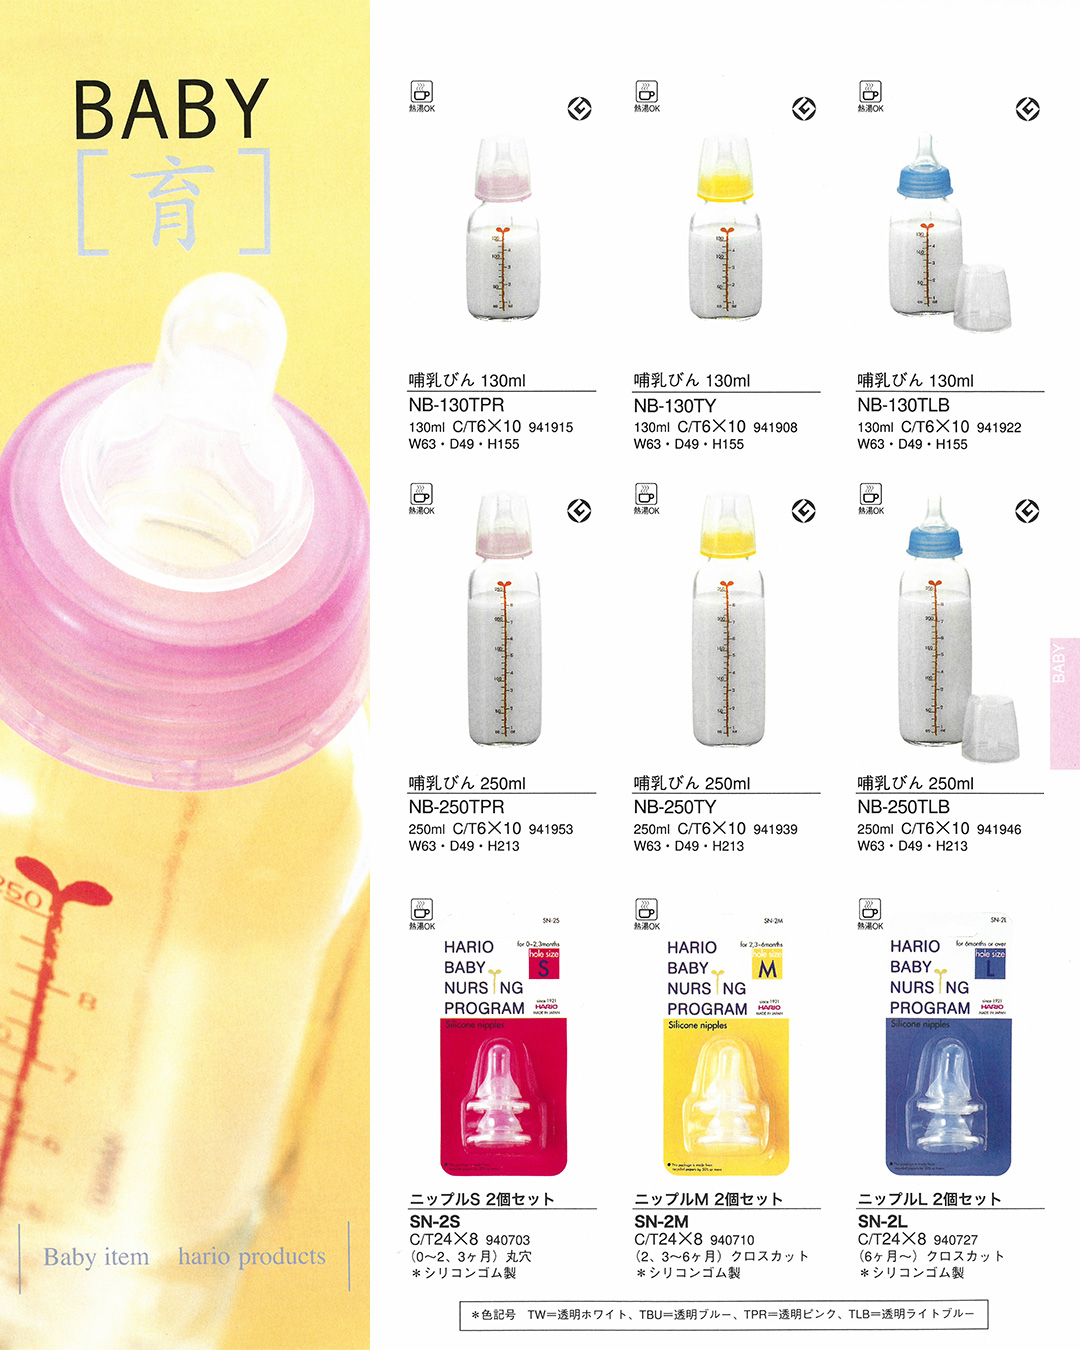 Hario, Baby, Heat-Resistant, Glass, Nursing Bottle, Nursing Program, Nipple, silicone rubber, NB-130TLB, NB-130TY, NB-130TLB, NB-250TPR, NB-250TY, NB-250TLB, SN-2S, SN-2M, SN-2L